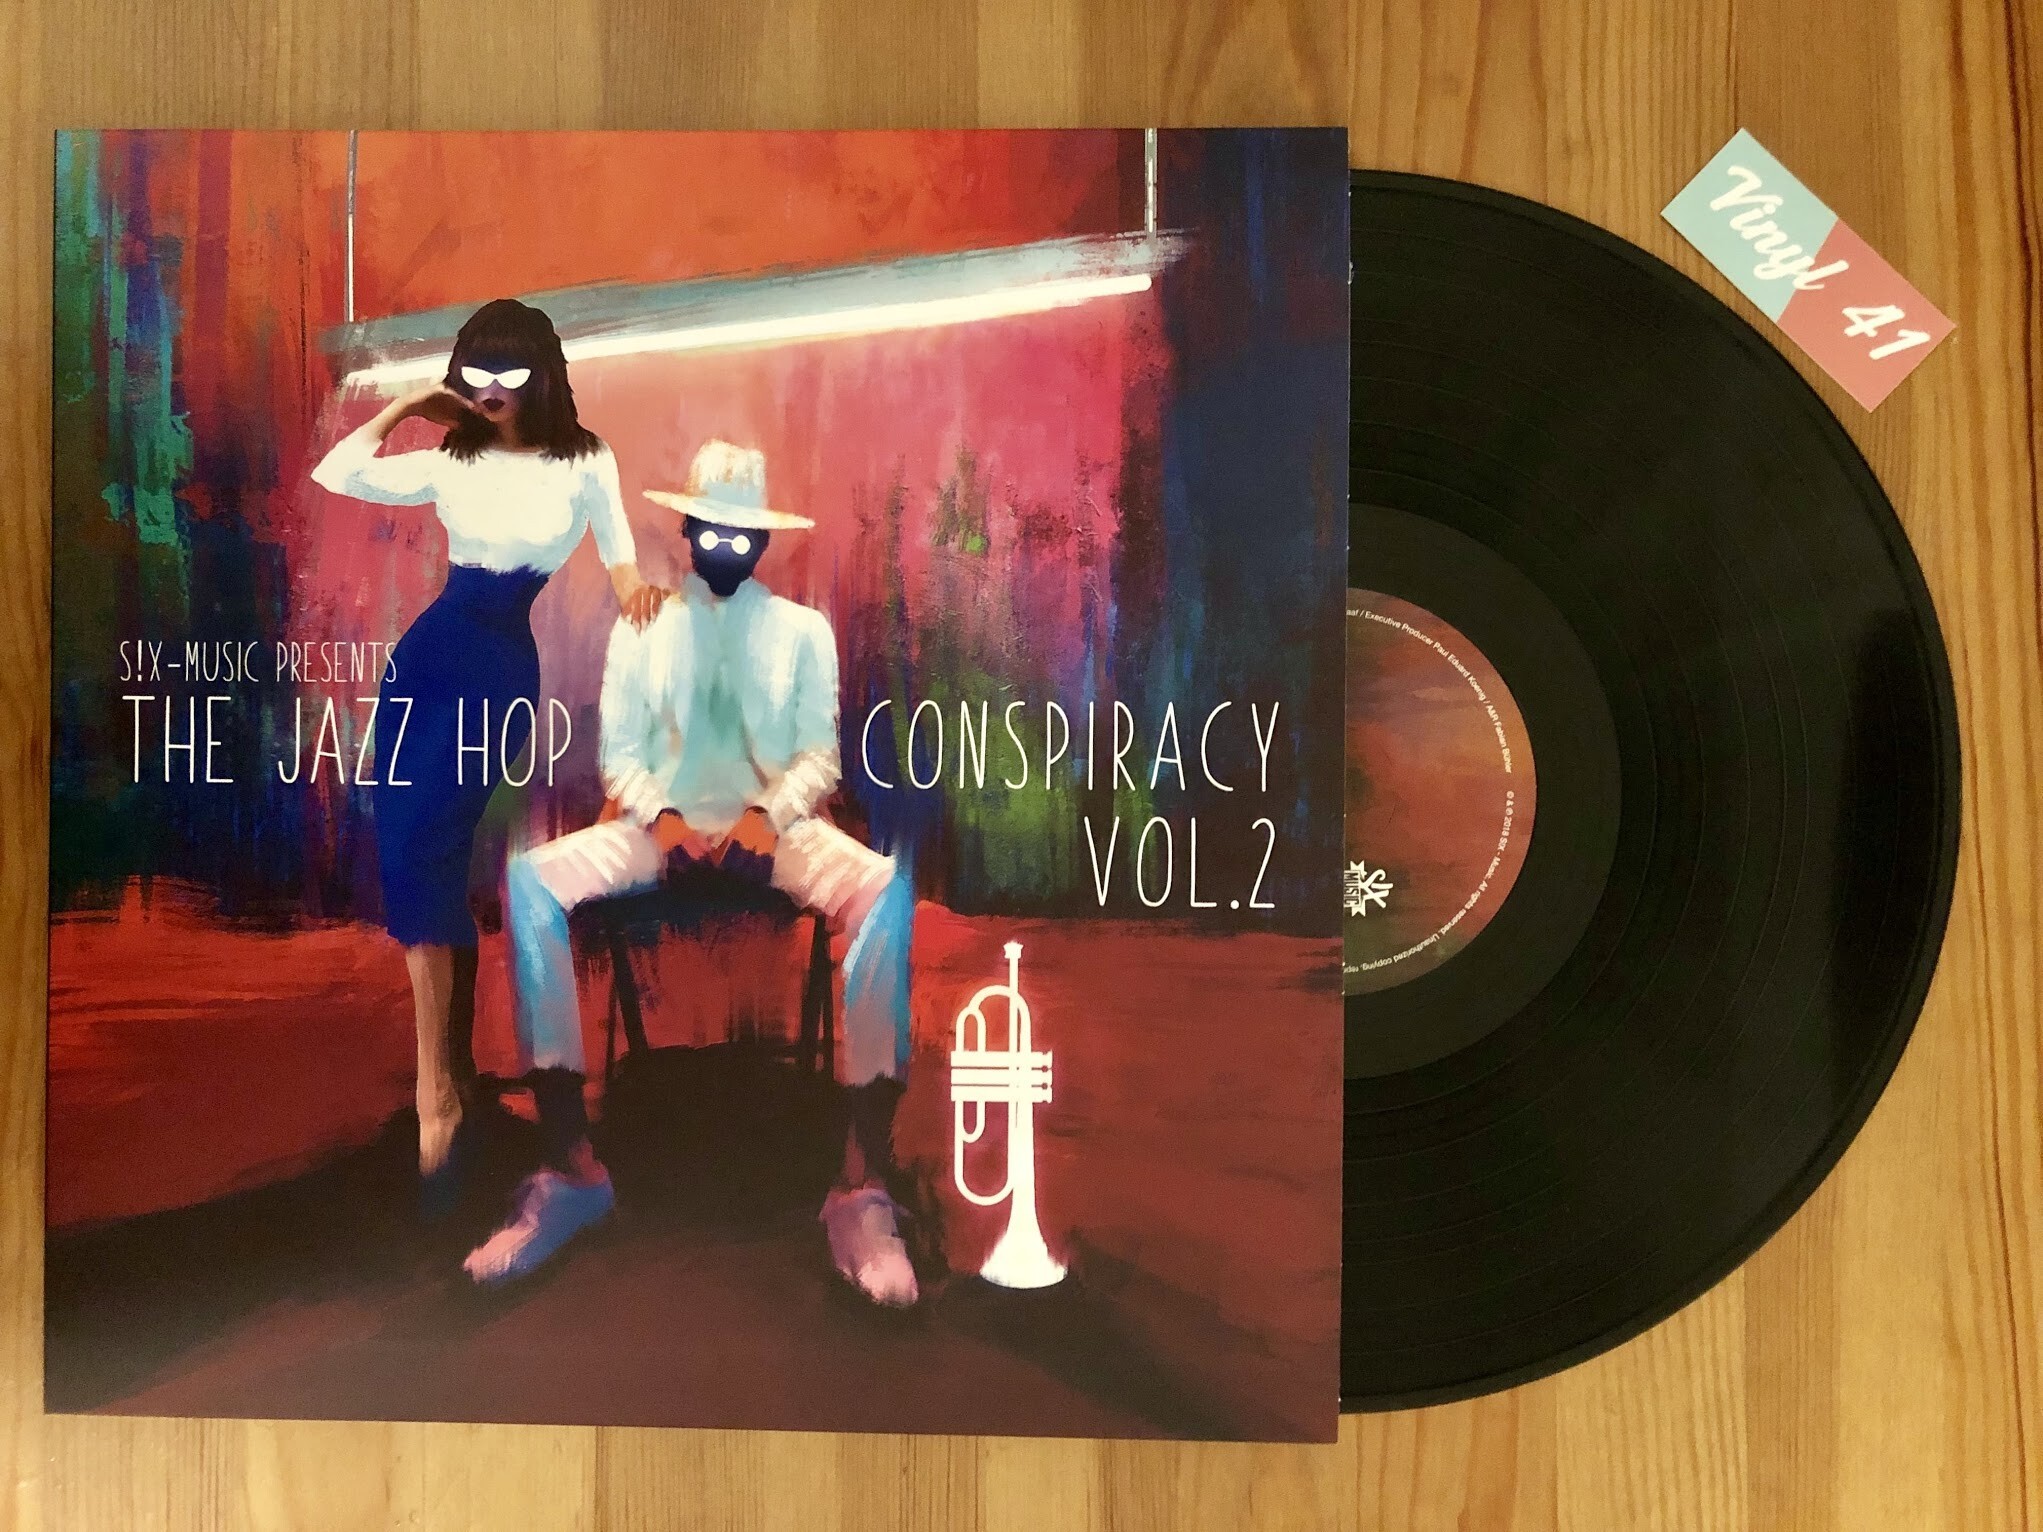 The Jazz Hop Conspiracy Vol. 2